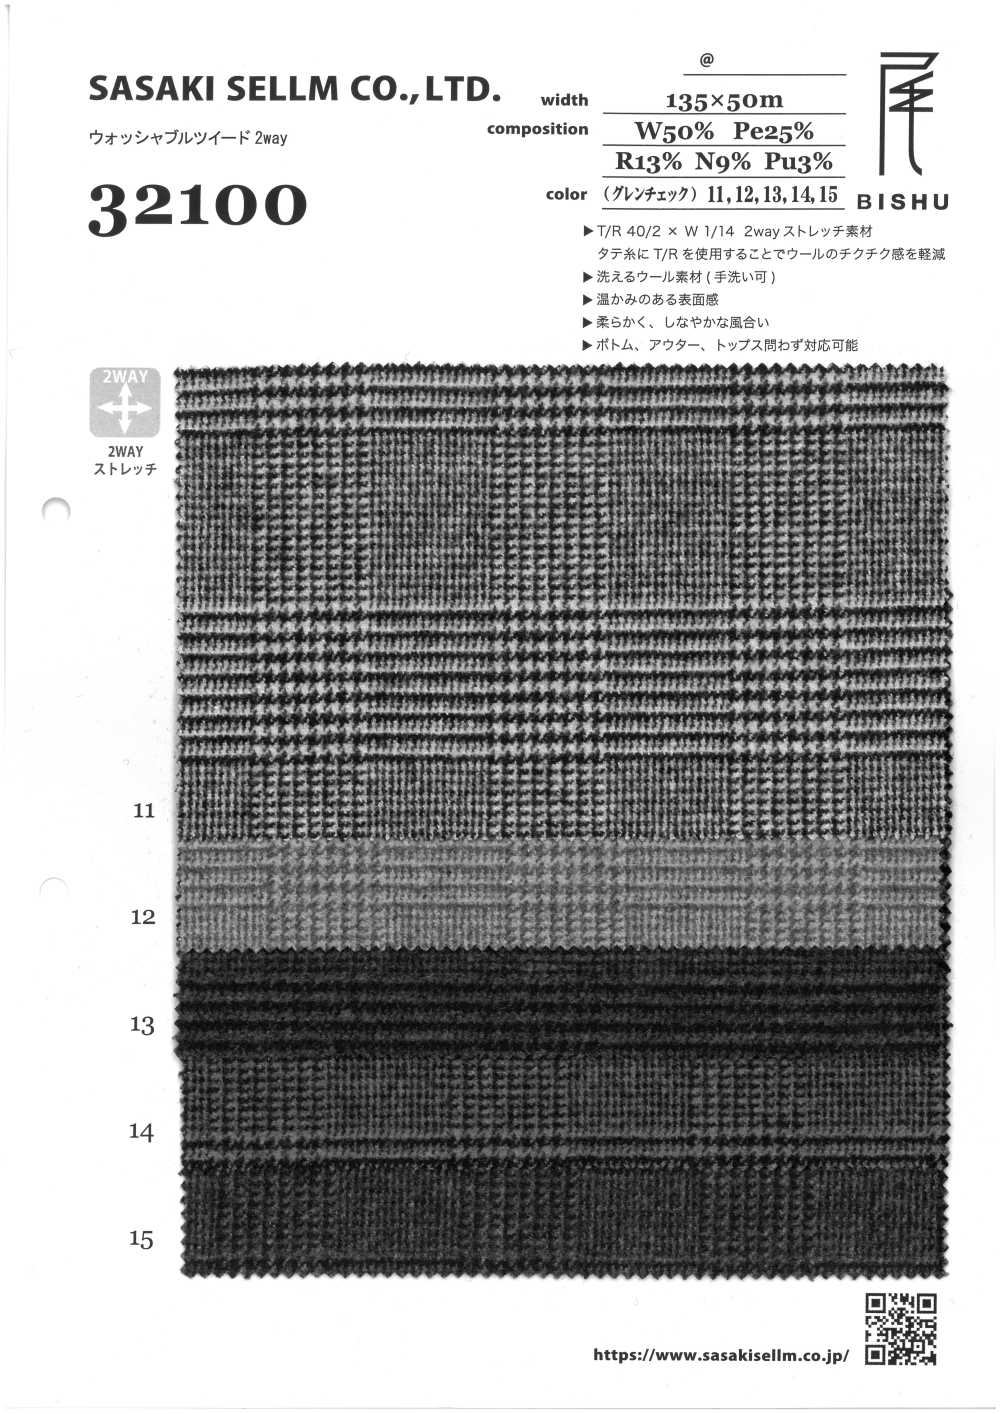 32100-10 Tweed Lavable 2WAY Glen Check[Fabrica Textil] SASAKISELLM